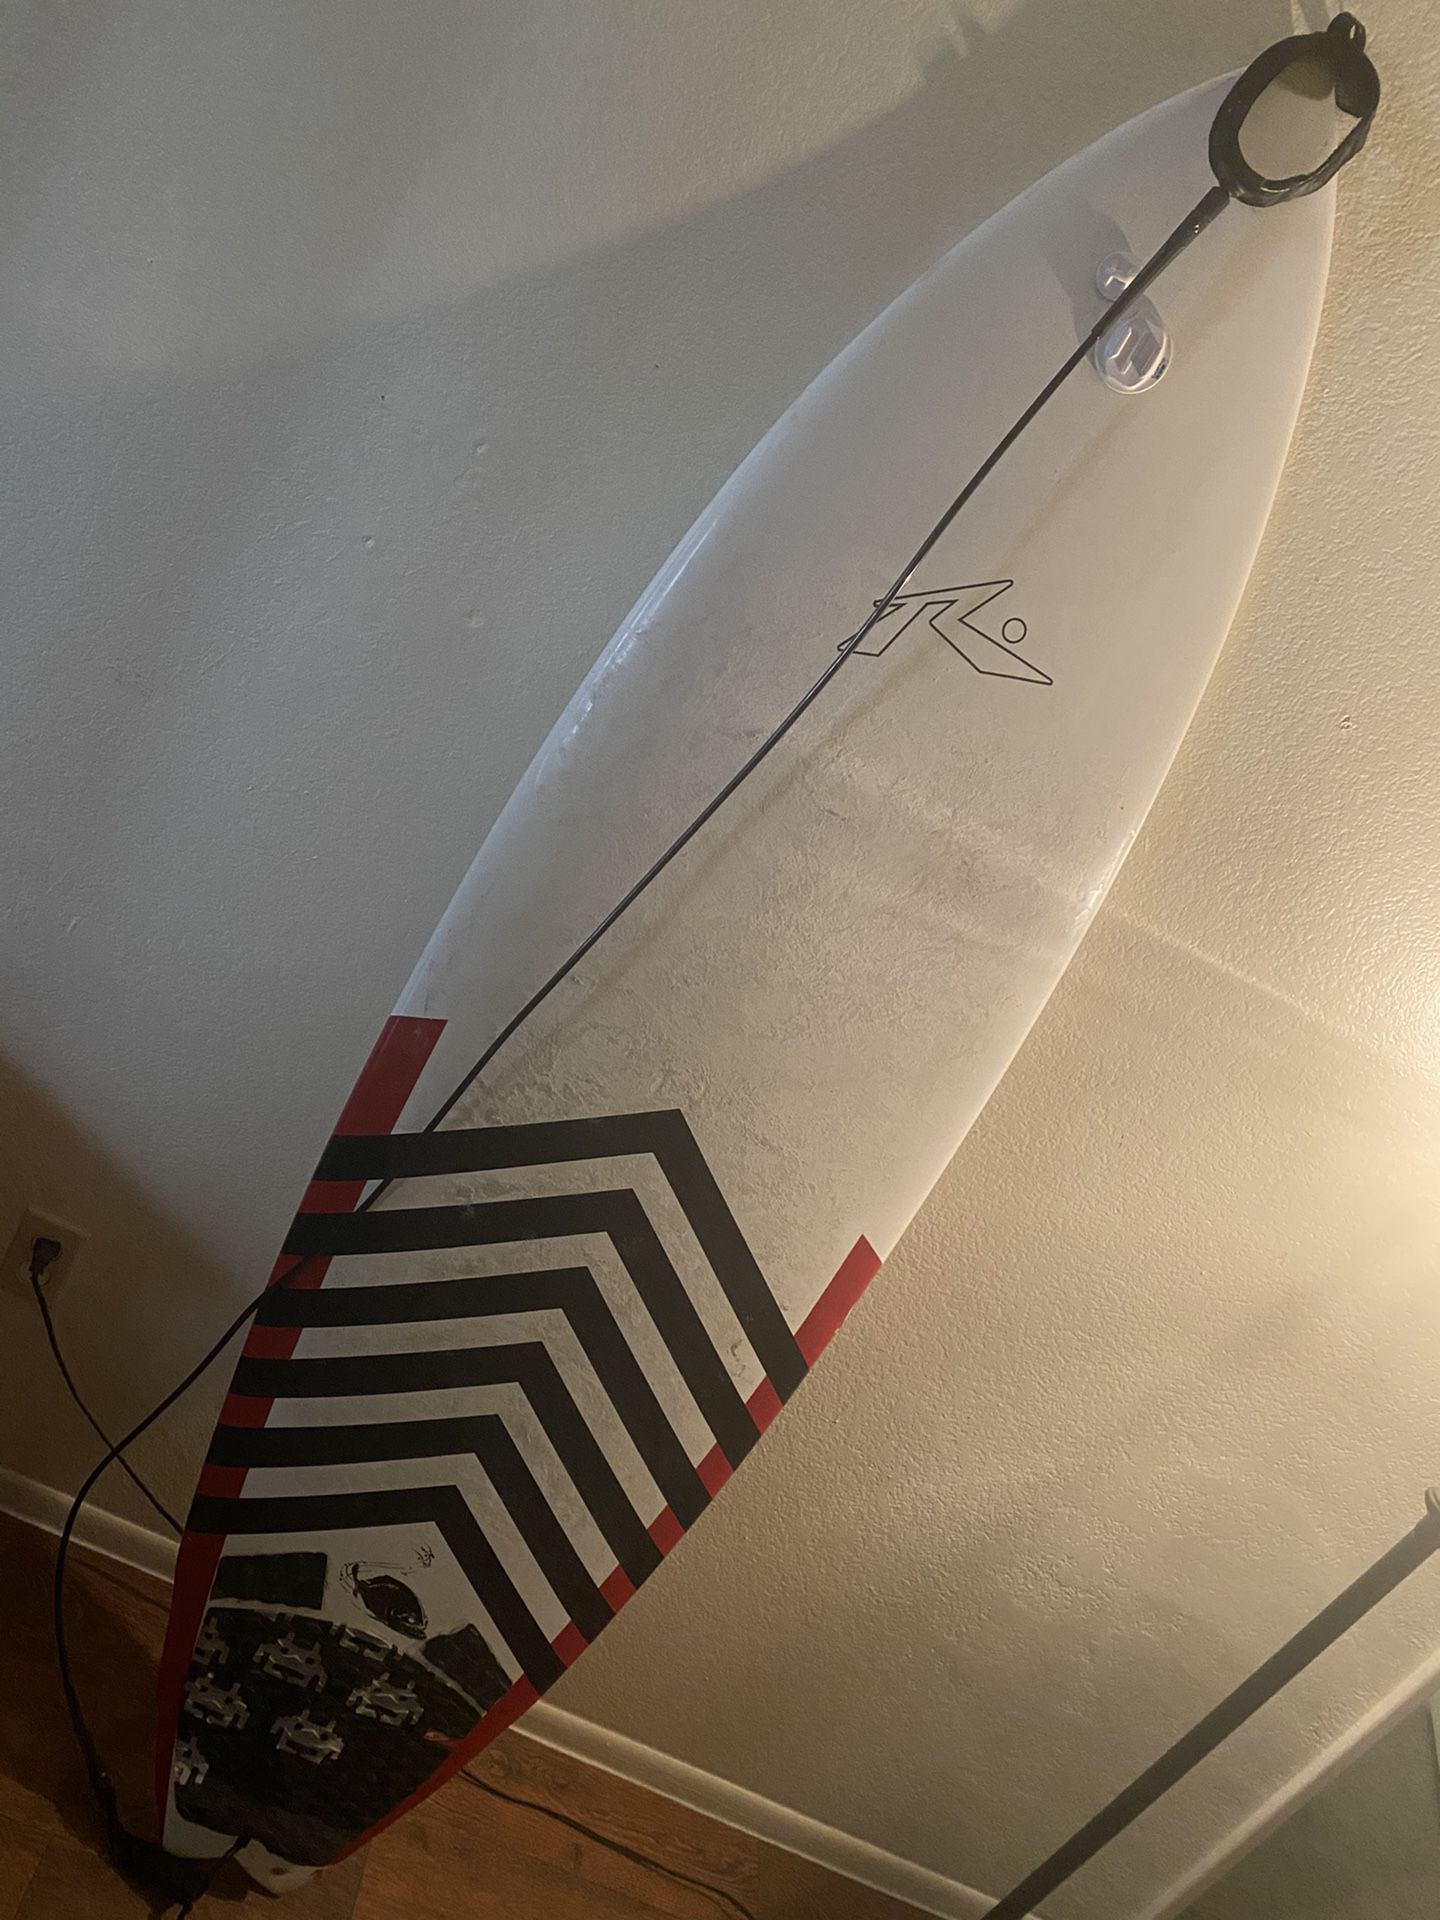 Rusty piranha 6’2” surfboard